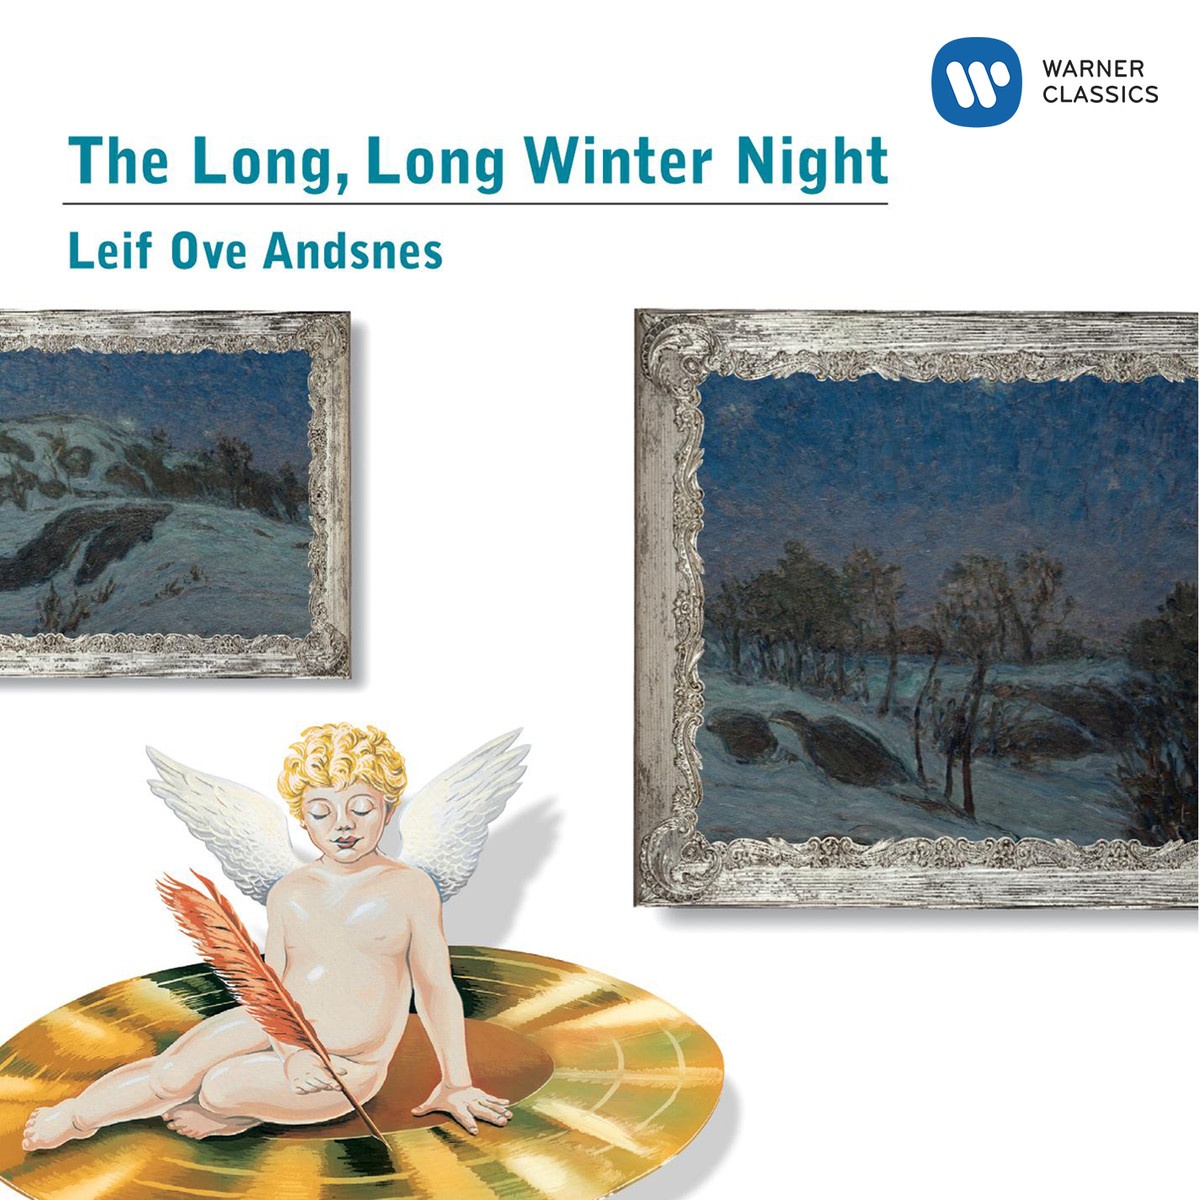 Dan långje långje vettranåttæ (The long, long winter night), Op.150 No. 37